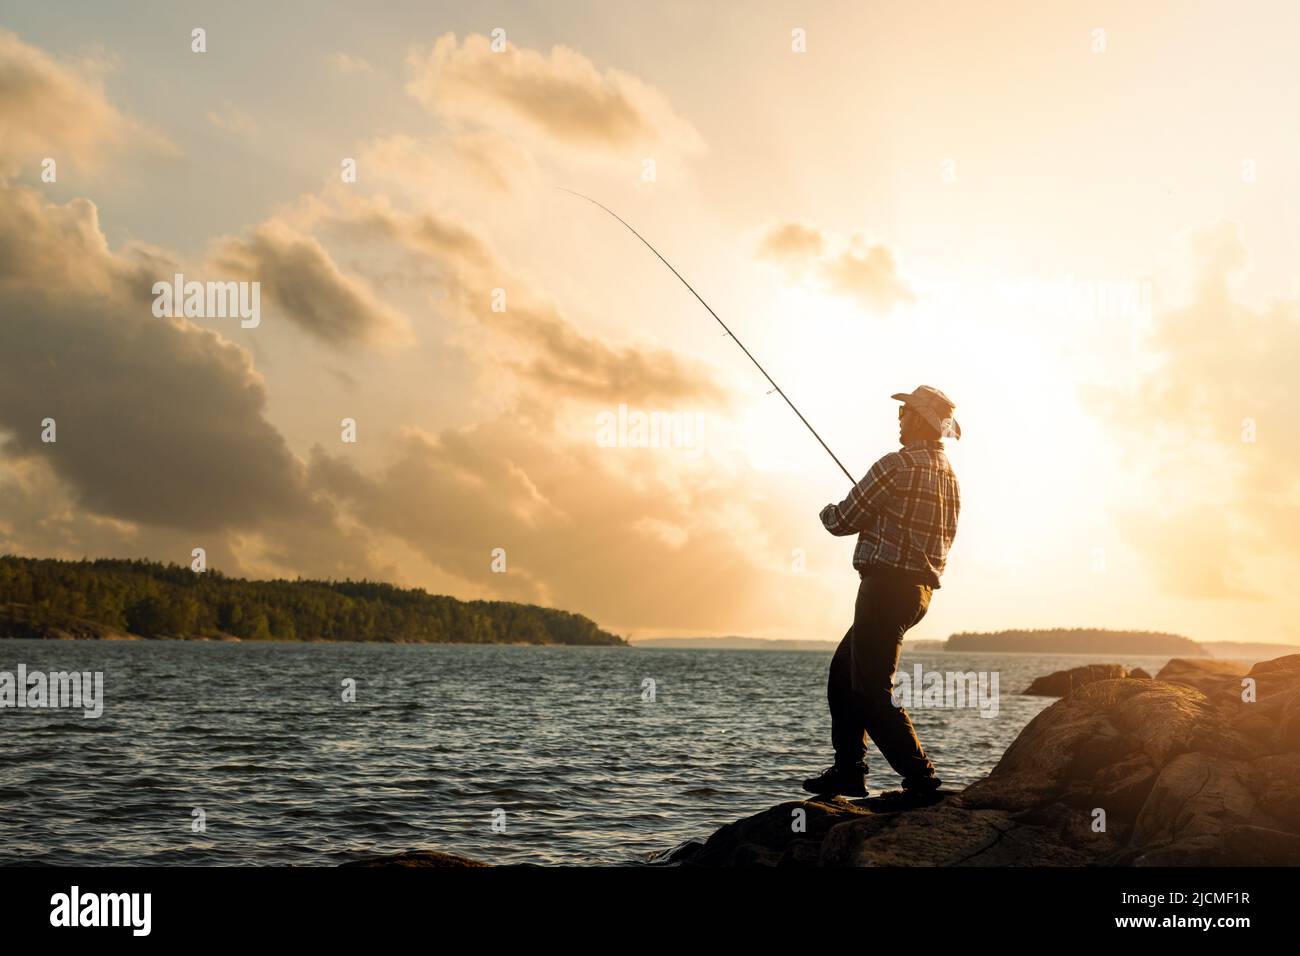 pesca en el banco. pescador con caña giratoria al atardecer. espacio de copia Foto de stock